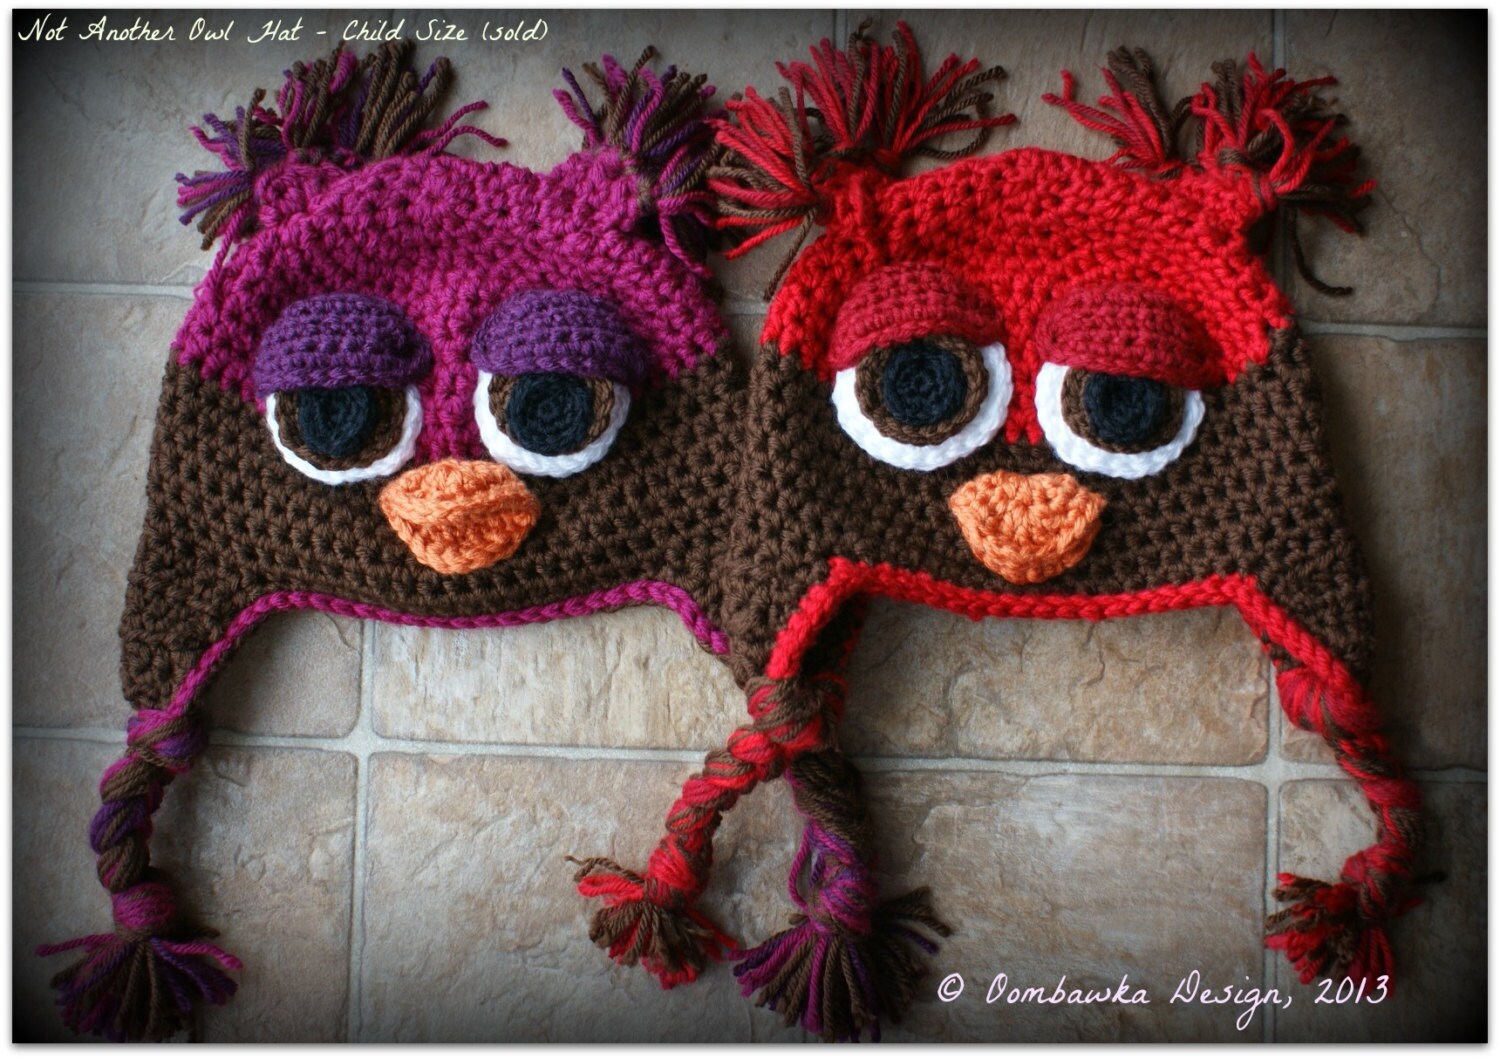 Crochet Yarn Talk - Red Heart Fashion Soft • Oombawka Design Crochet